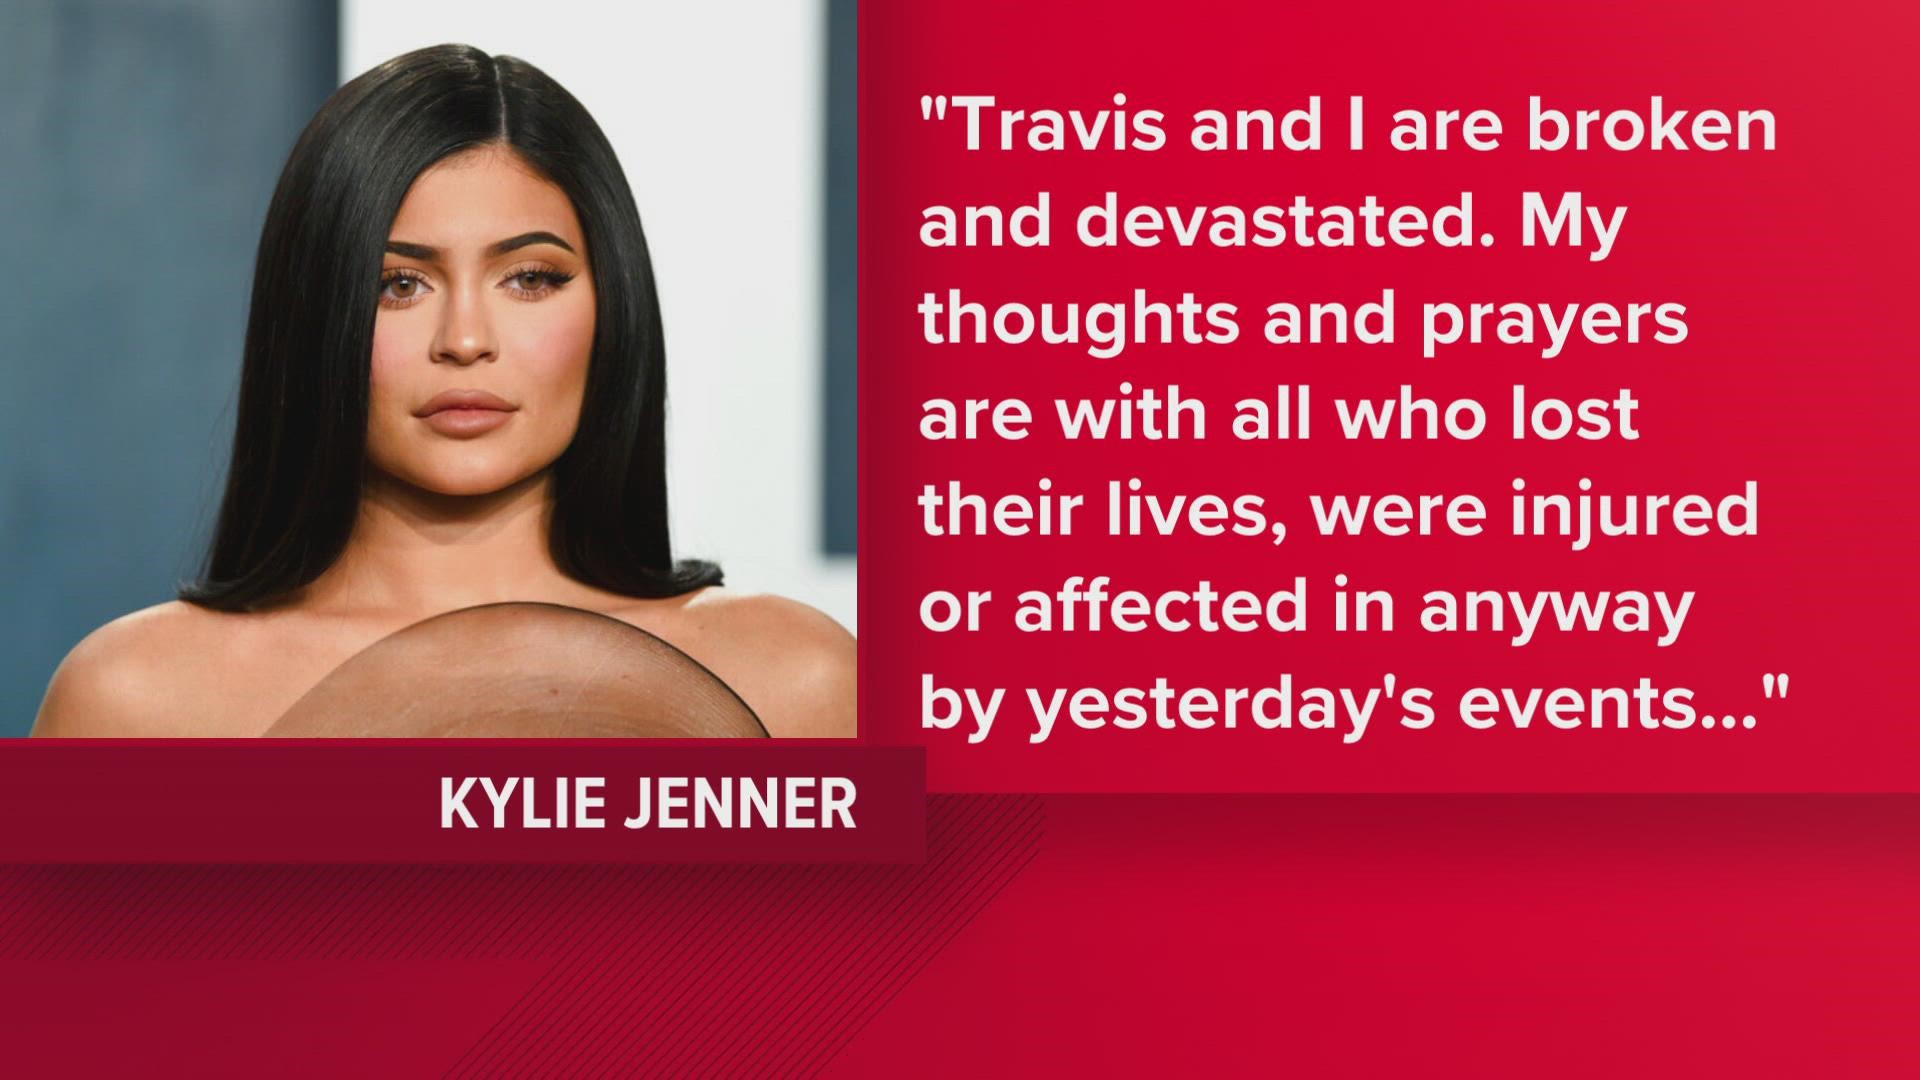 Kylie Jenner, Travis Scott's girlfriend, released the statement on her Instagram stories overnight.